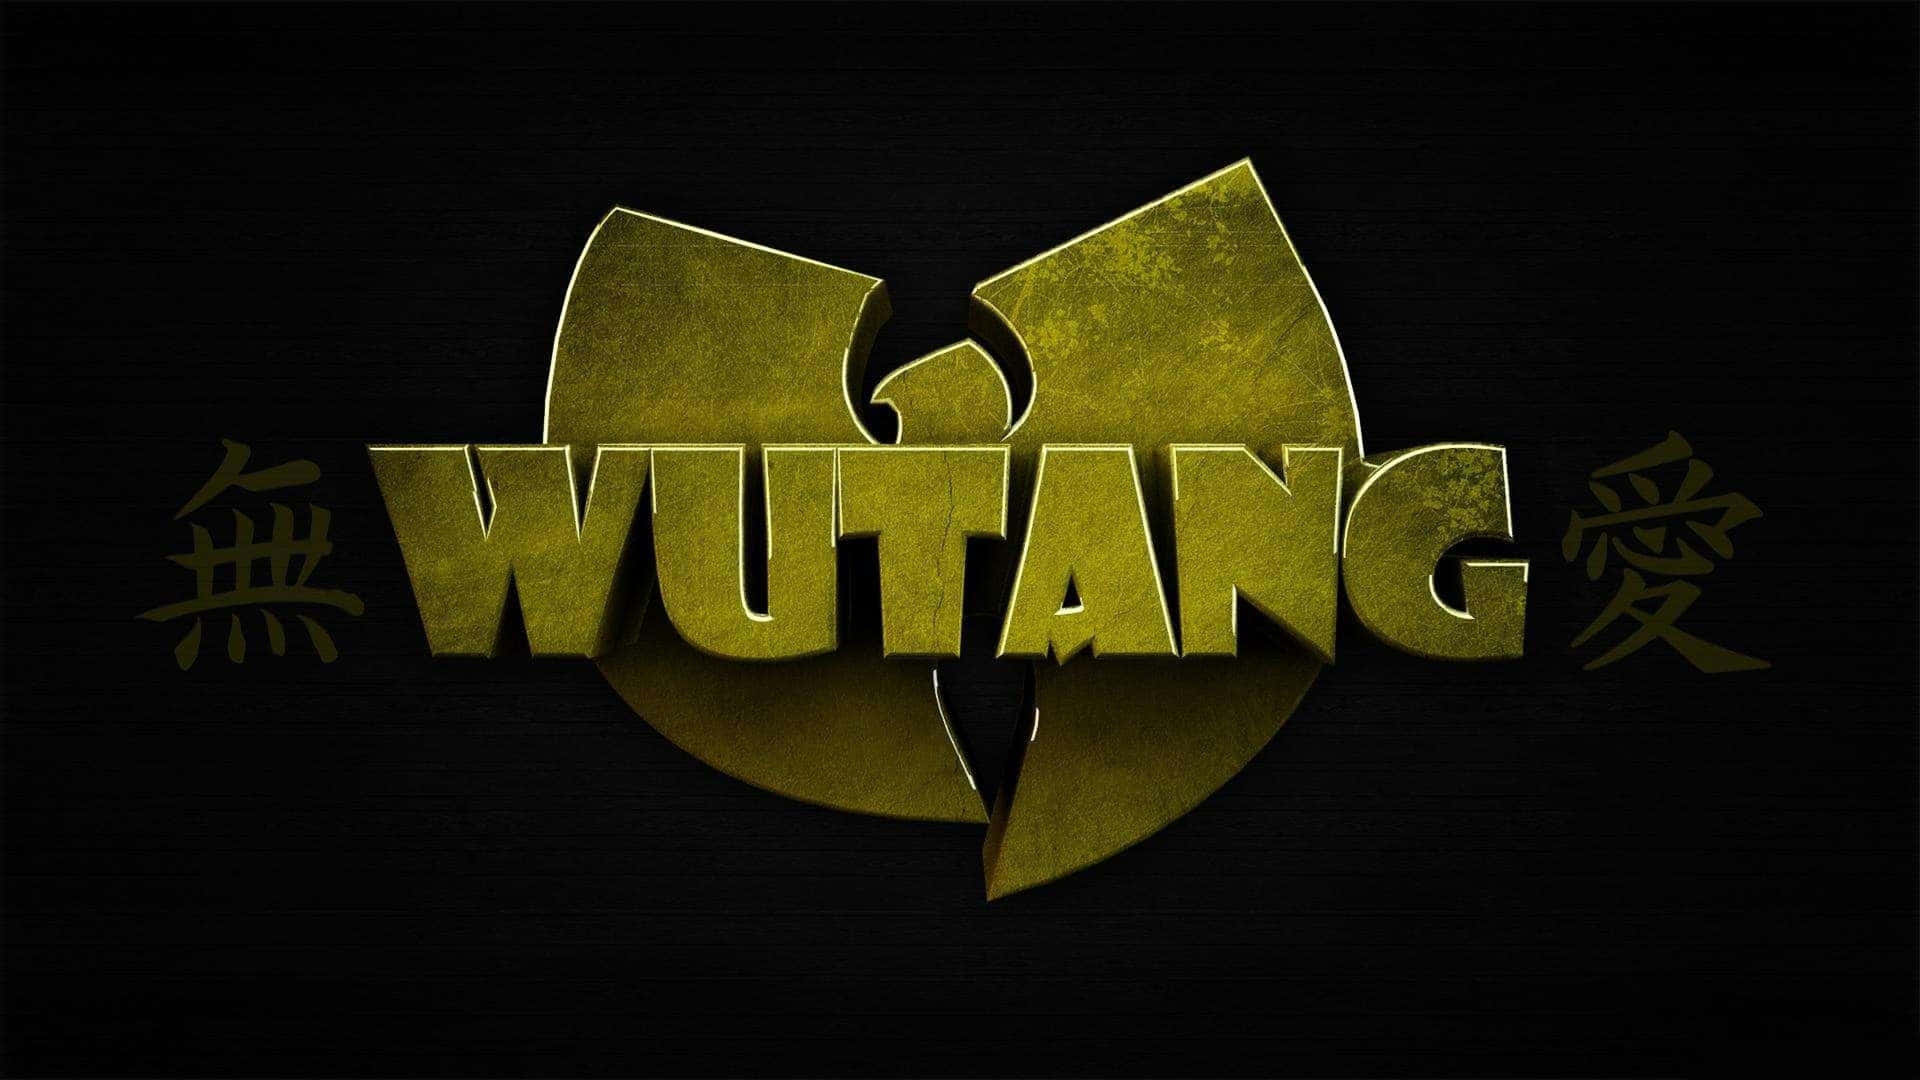 Klassischeswu Tang Clan-logo In 4k Wallpaper